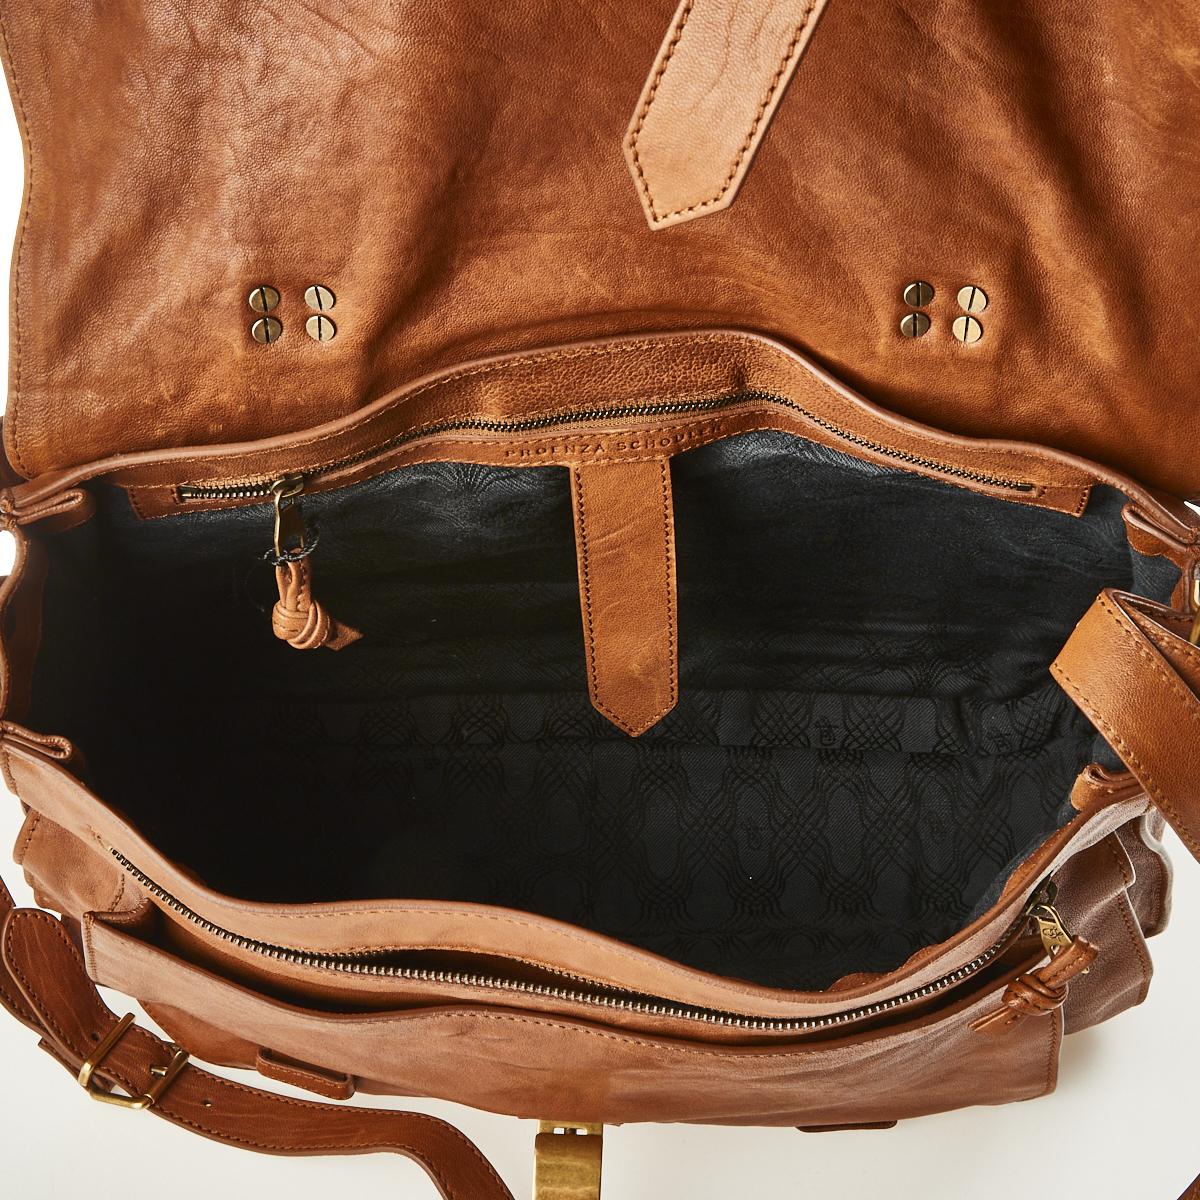 Proenza Schouler PS1 Medium Satchel Bag, Saddle